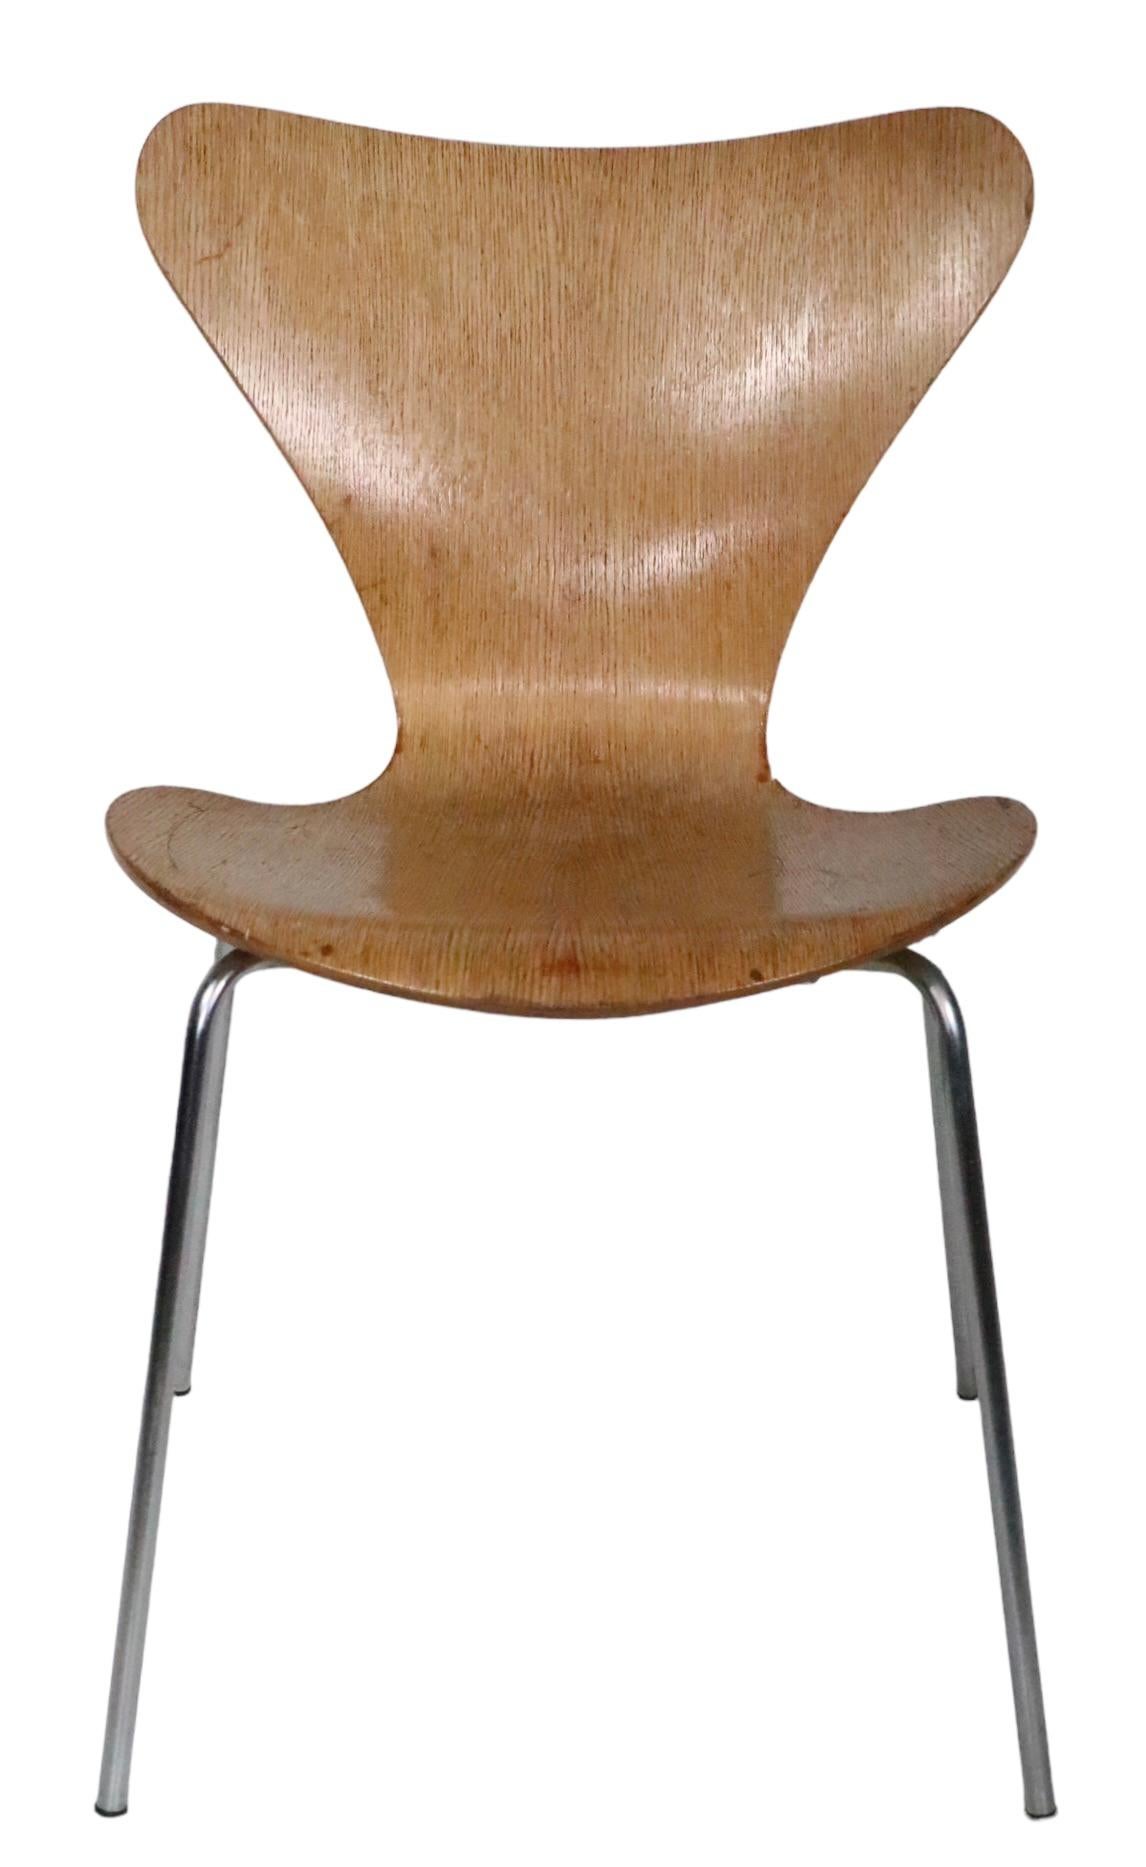 Arne Jacobsen Fritz Hansen Series 7 Butterfly Chair in Oak Veneer, circa 1960s For Sale 4